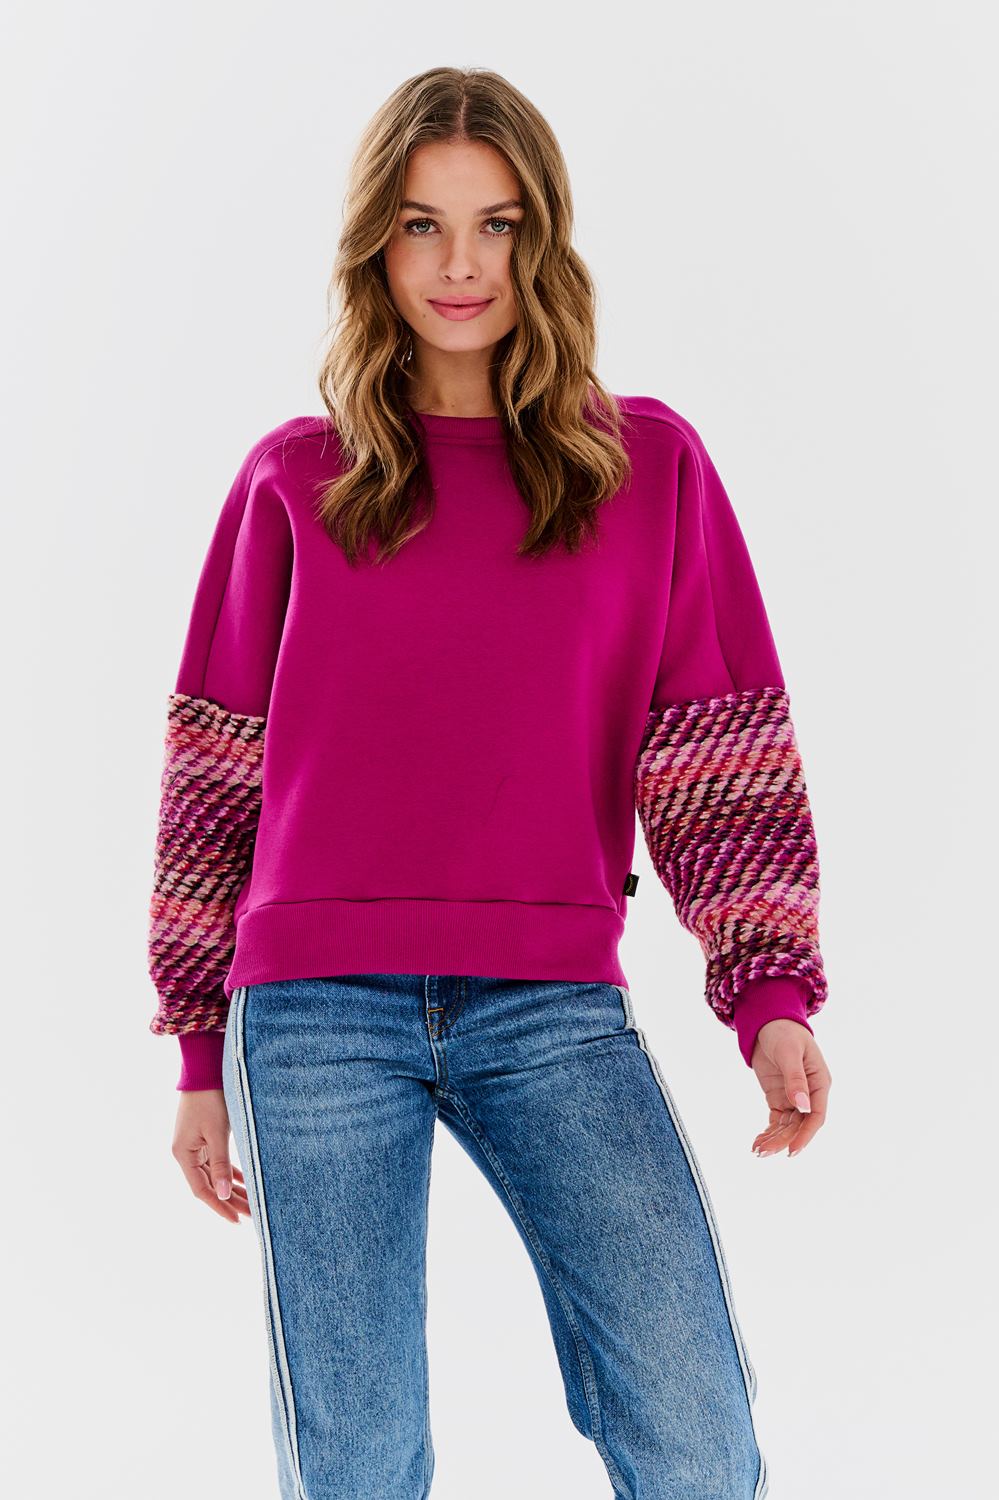 Unspoken combined fabric sweatshirt